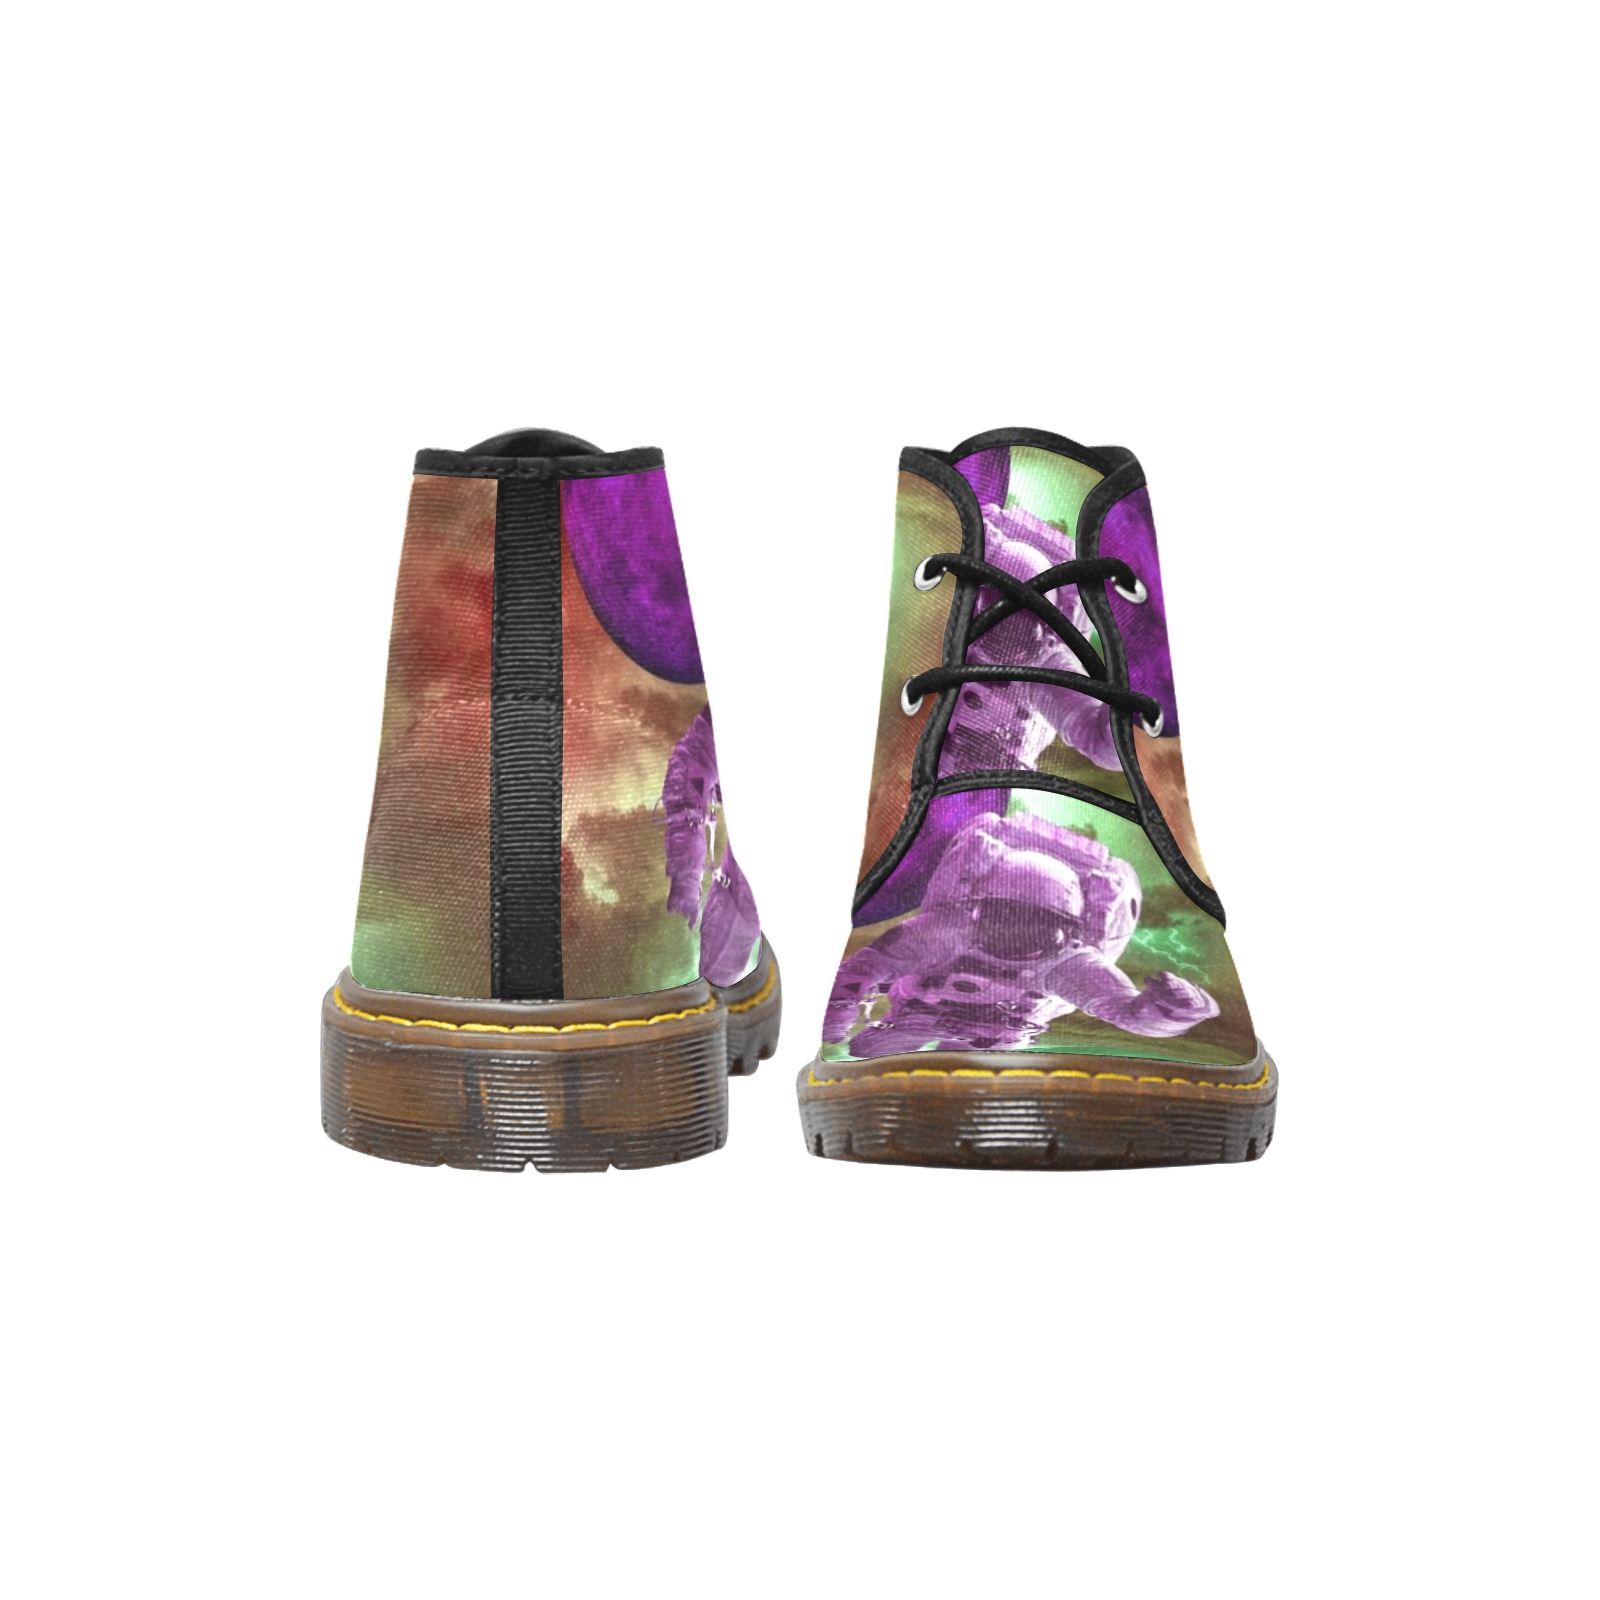 CLOUDS 6 ASTRONAUT Women's Canvas Chukka Boots (Model 2402-1)